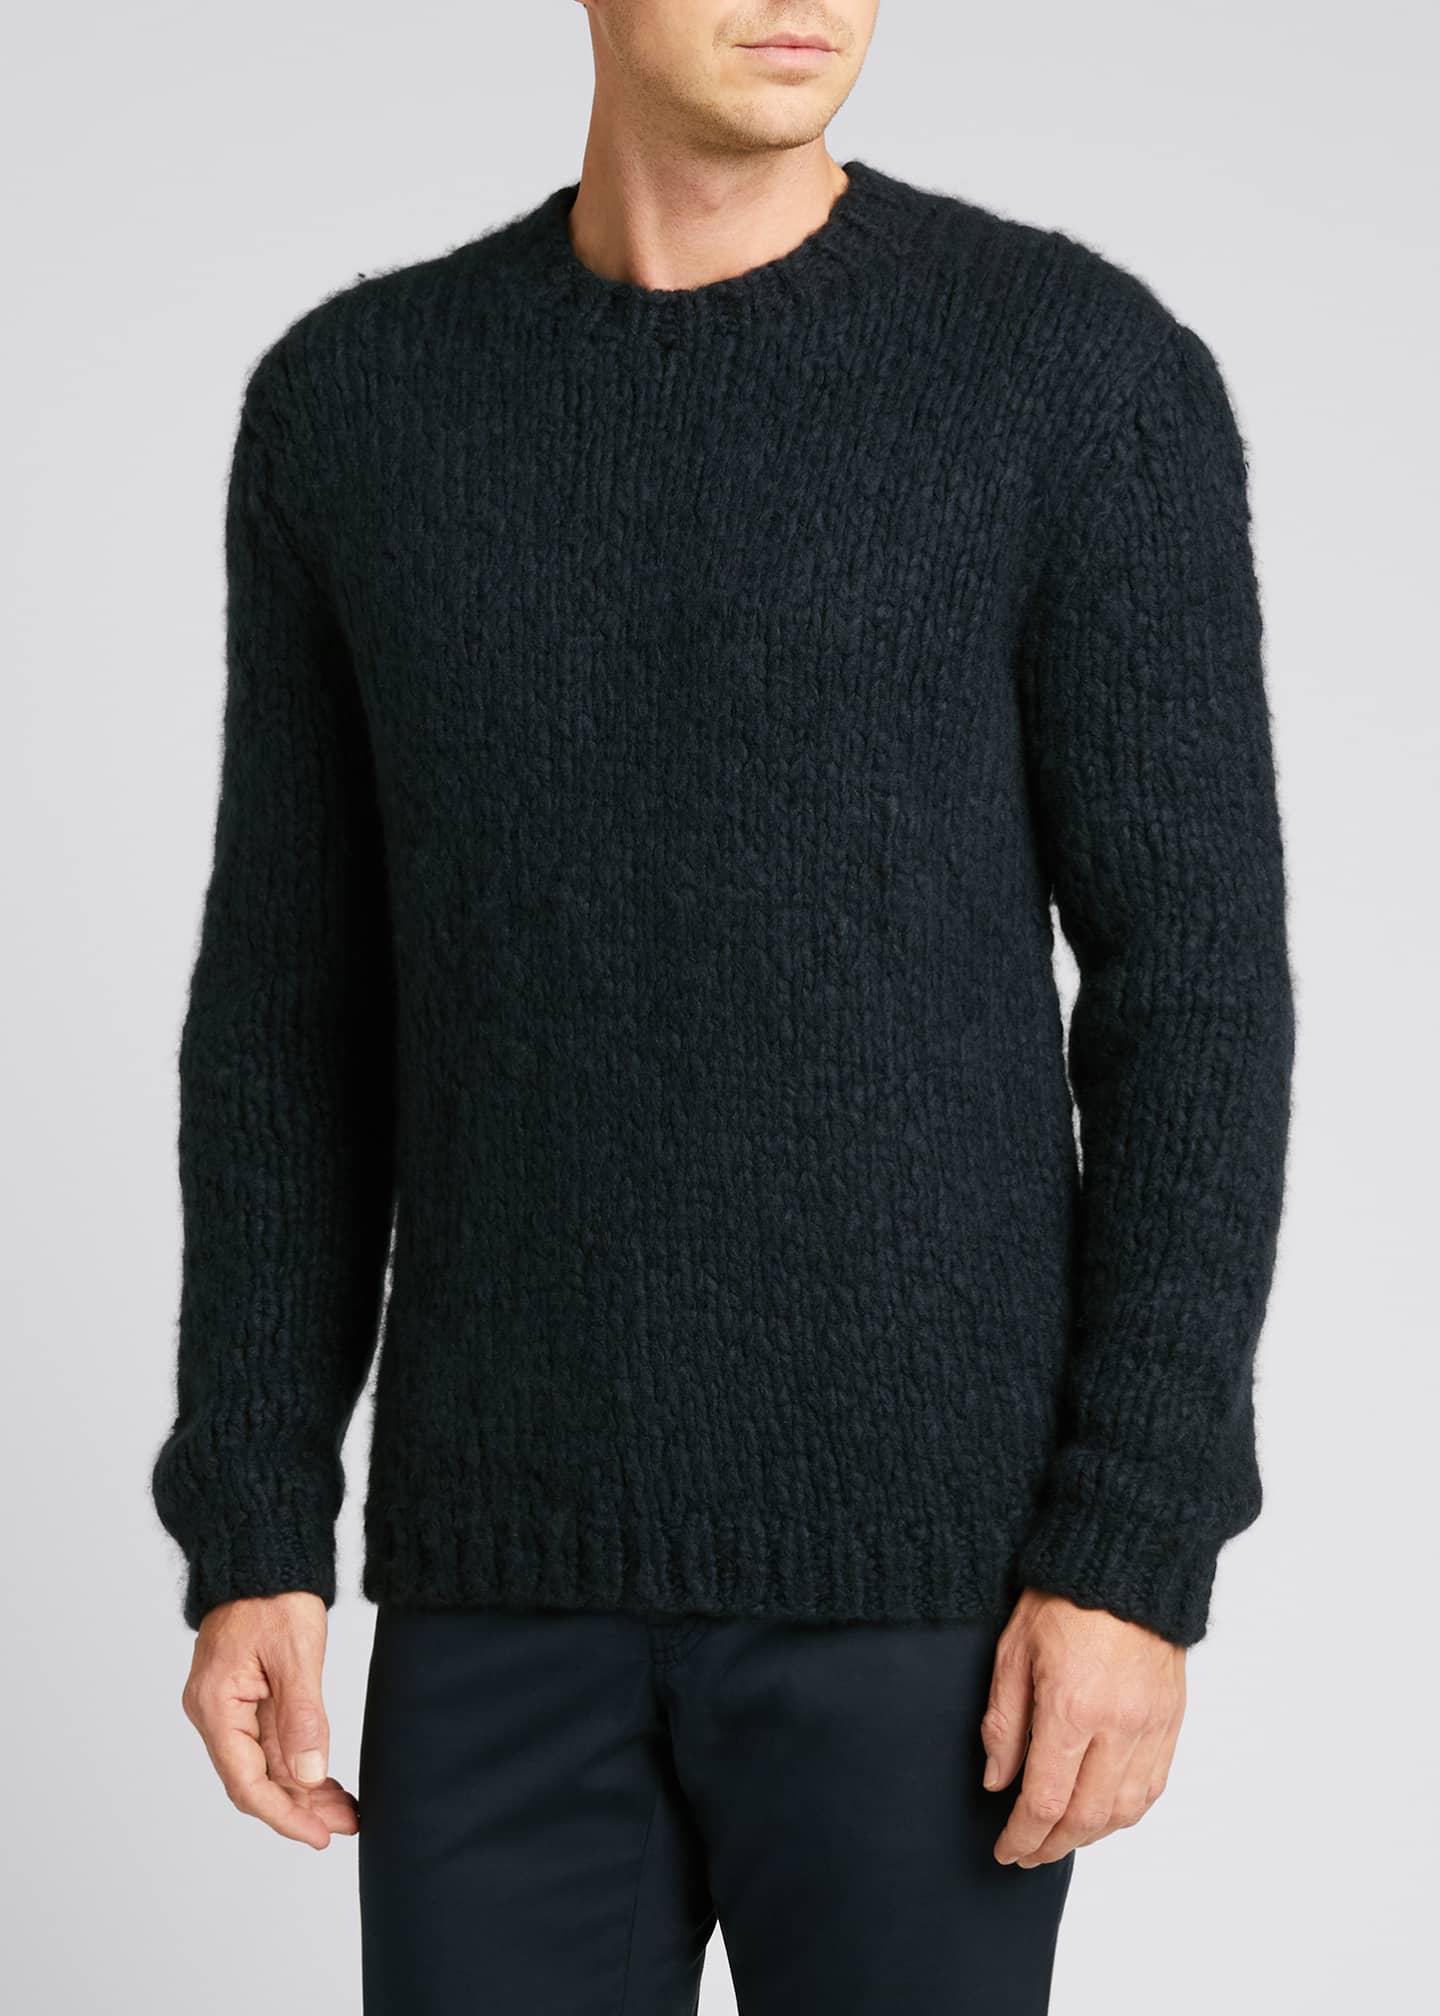 Gabriela Hearst Men's Lawrence Solid Knit Sweater - Bergdorf Goodman